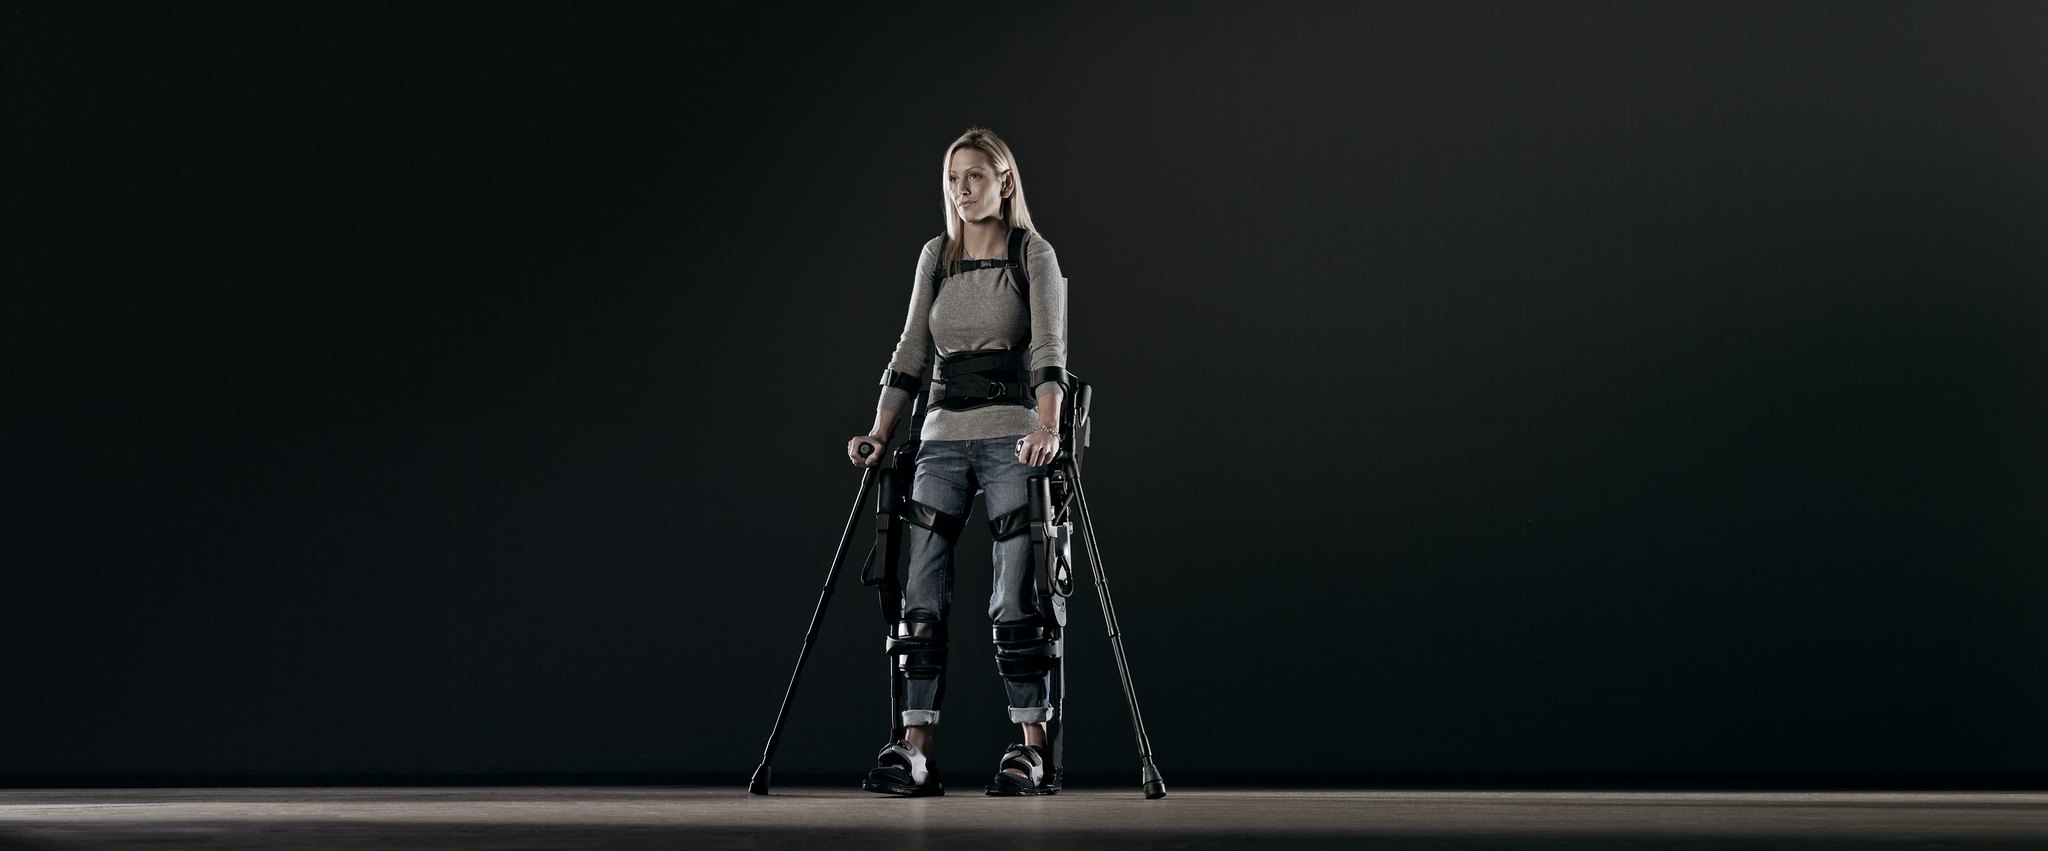 Протез Hero Arm от open Bionics. Марвел адванс Байоникс. Industrial Exoskeleton.